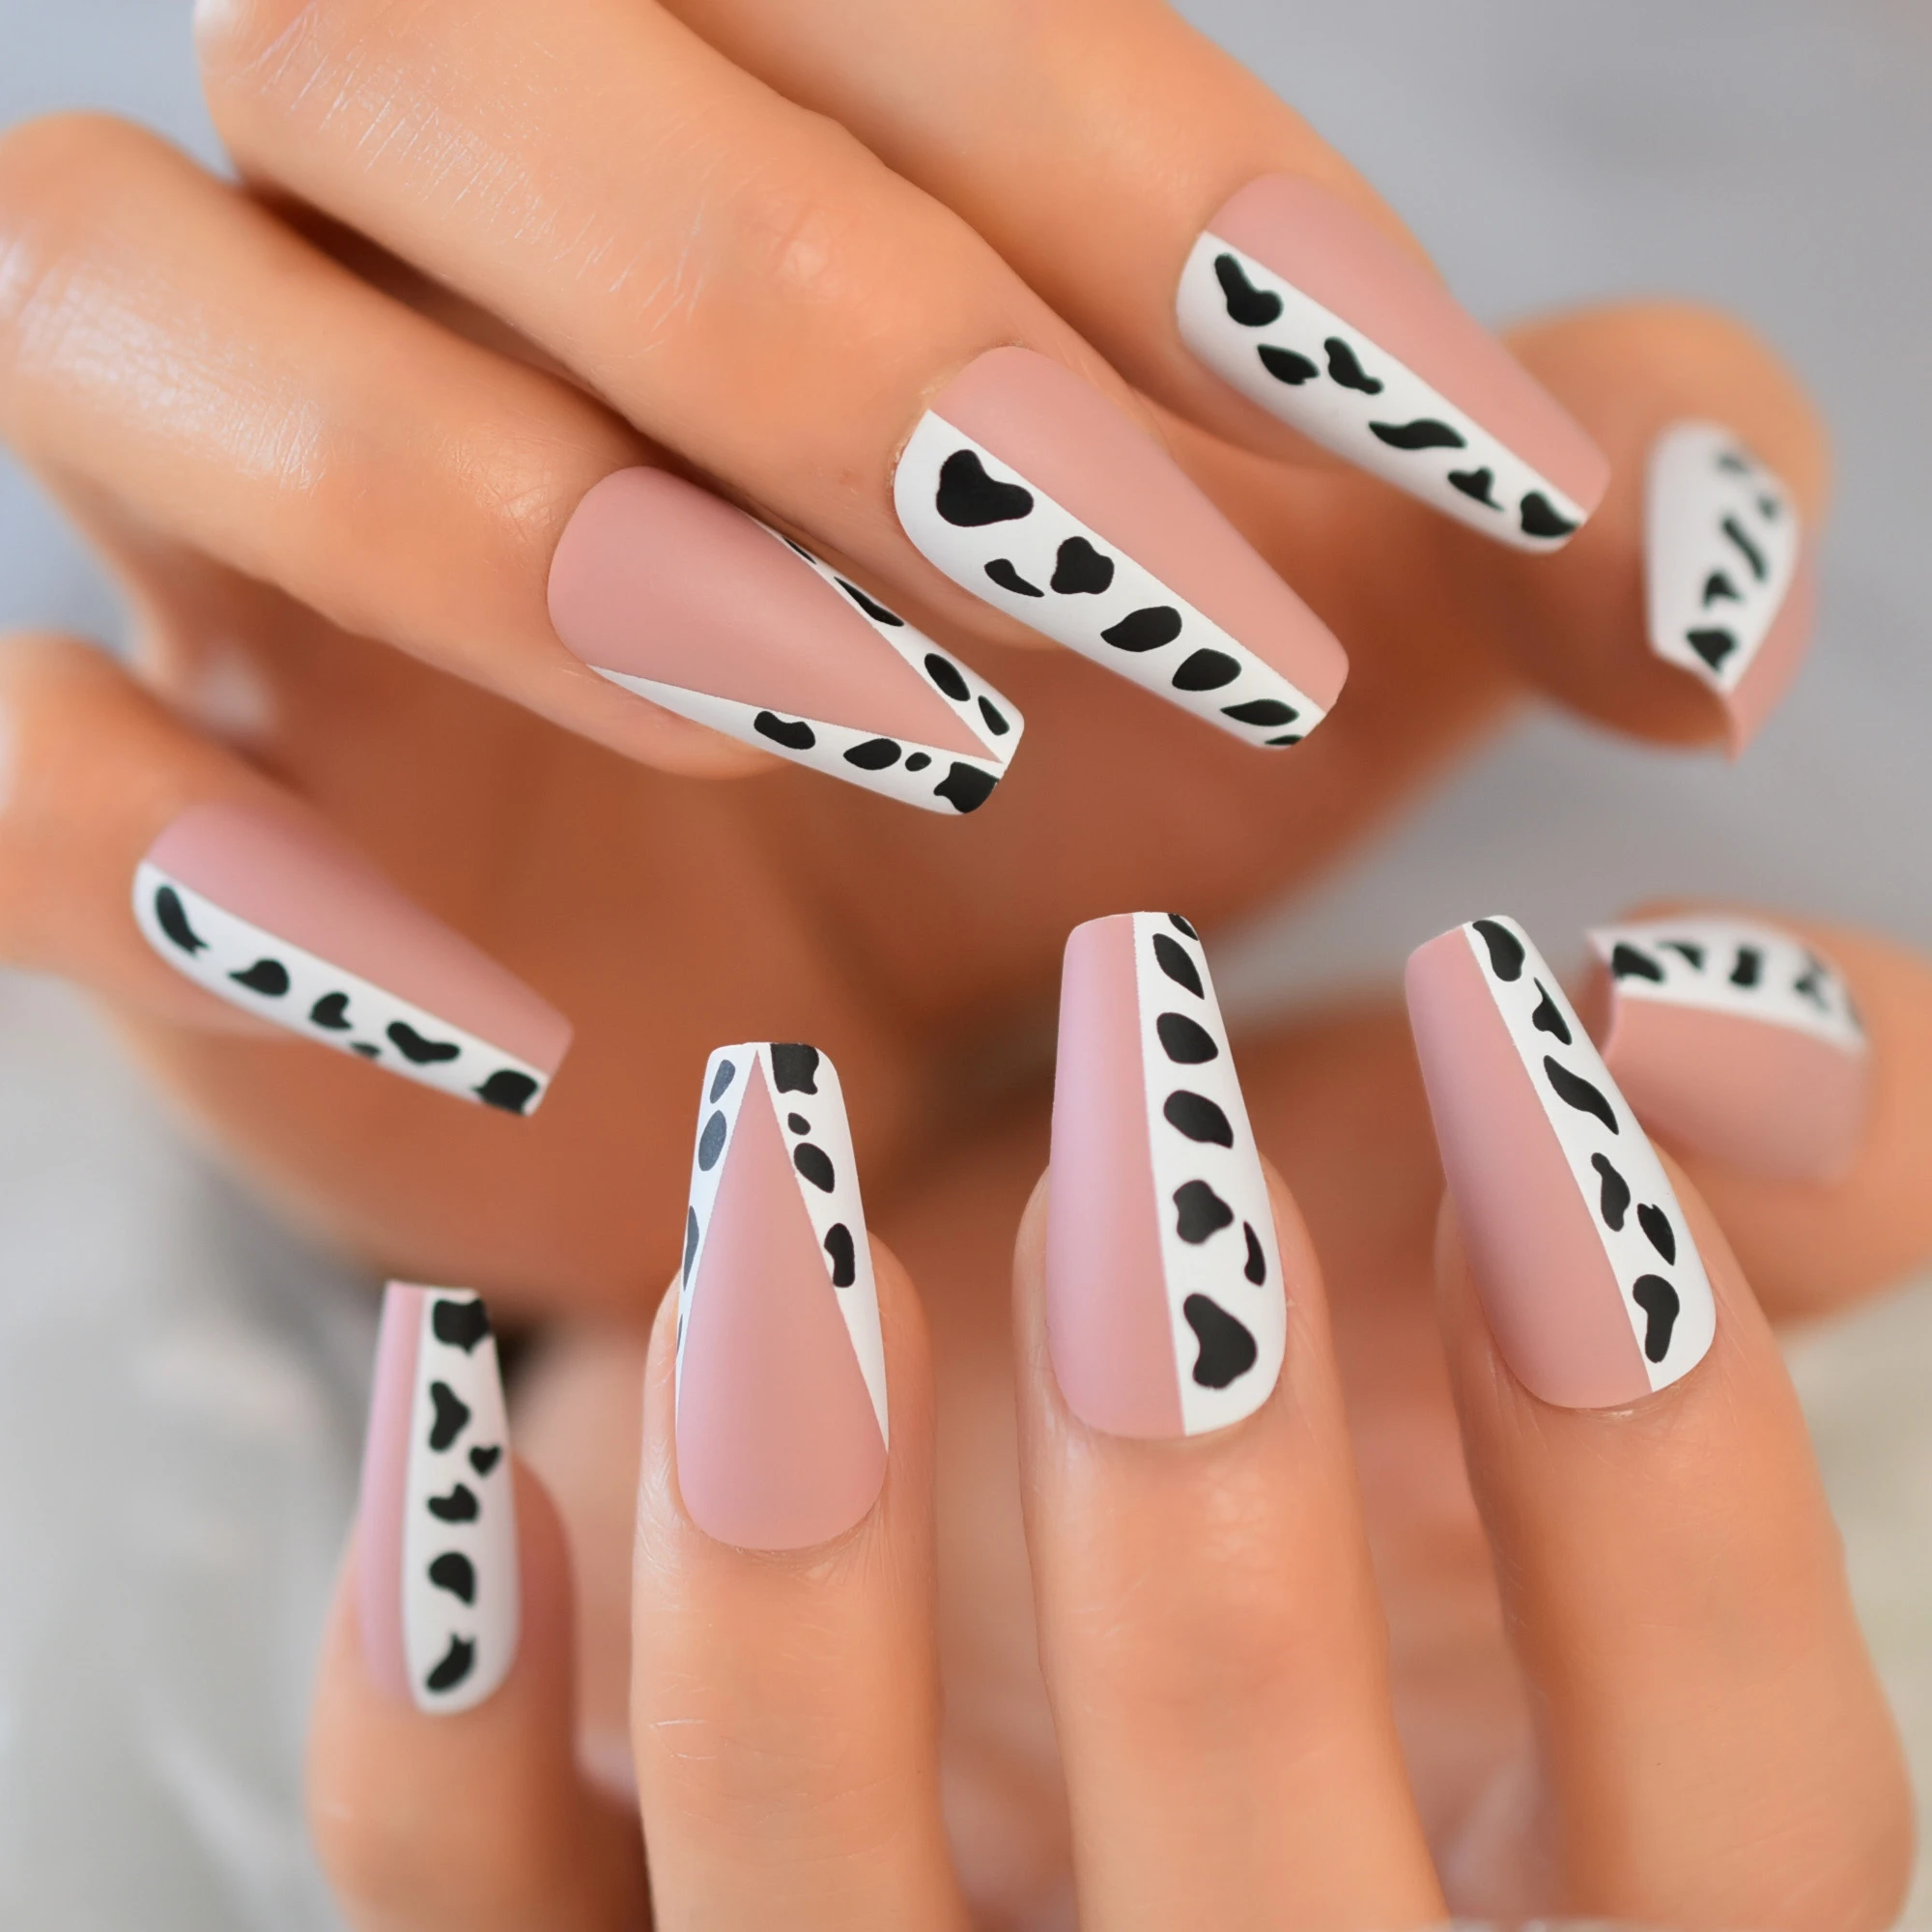 Samme Vandre mælk Spotty Dalmatian Tips For Nails Extension Long Fake Ballerina Gel Nail Art  White Pink V Pattern Unhas Posticas French|False Nails| - AliExpress